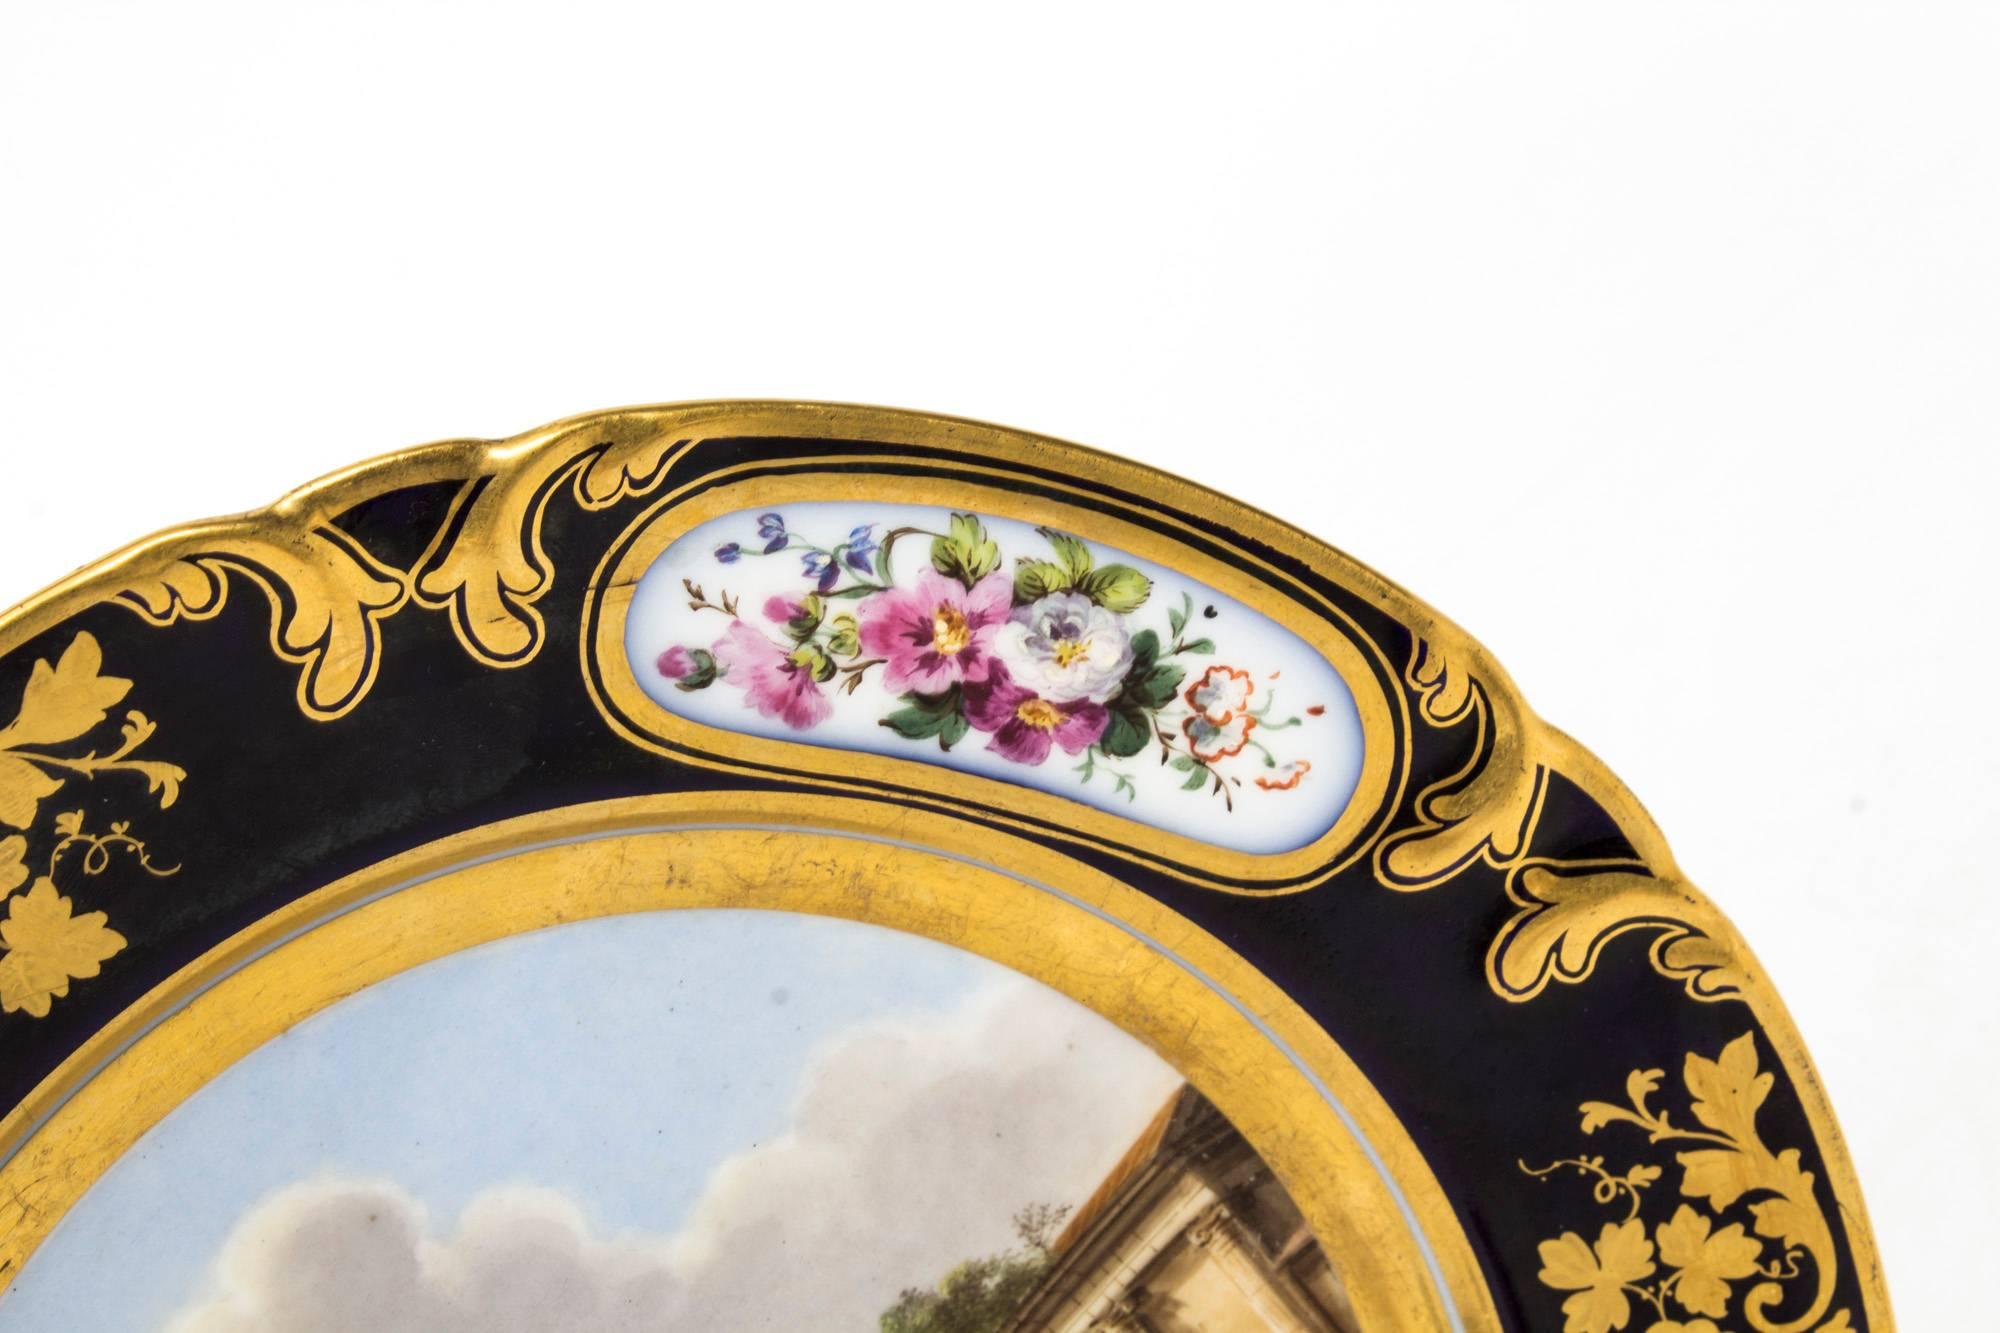 19th Century Porcelain Plate Pucher Deroche, Paris In Excellent Condition For Sale In London, GB